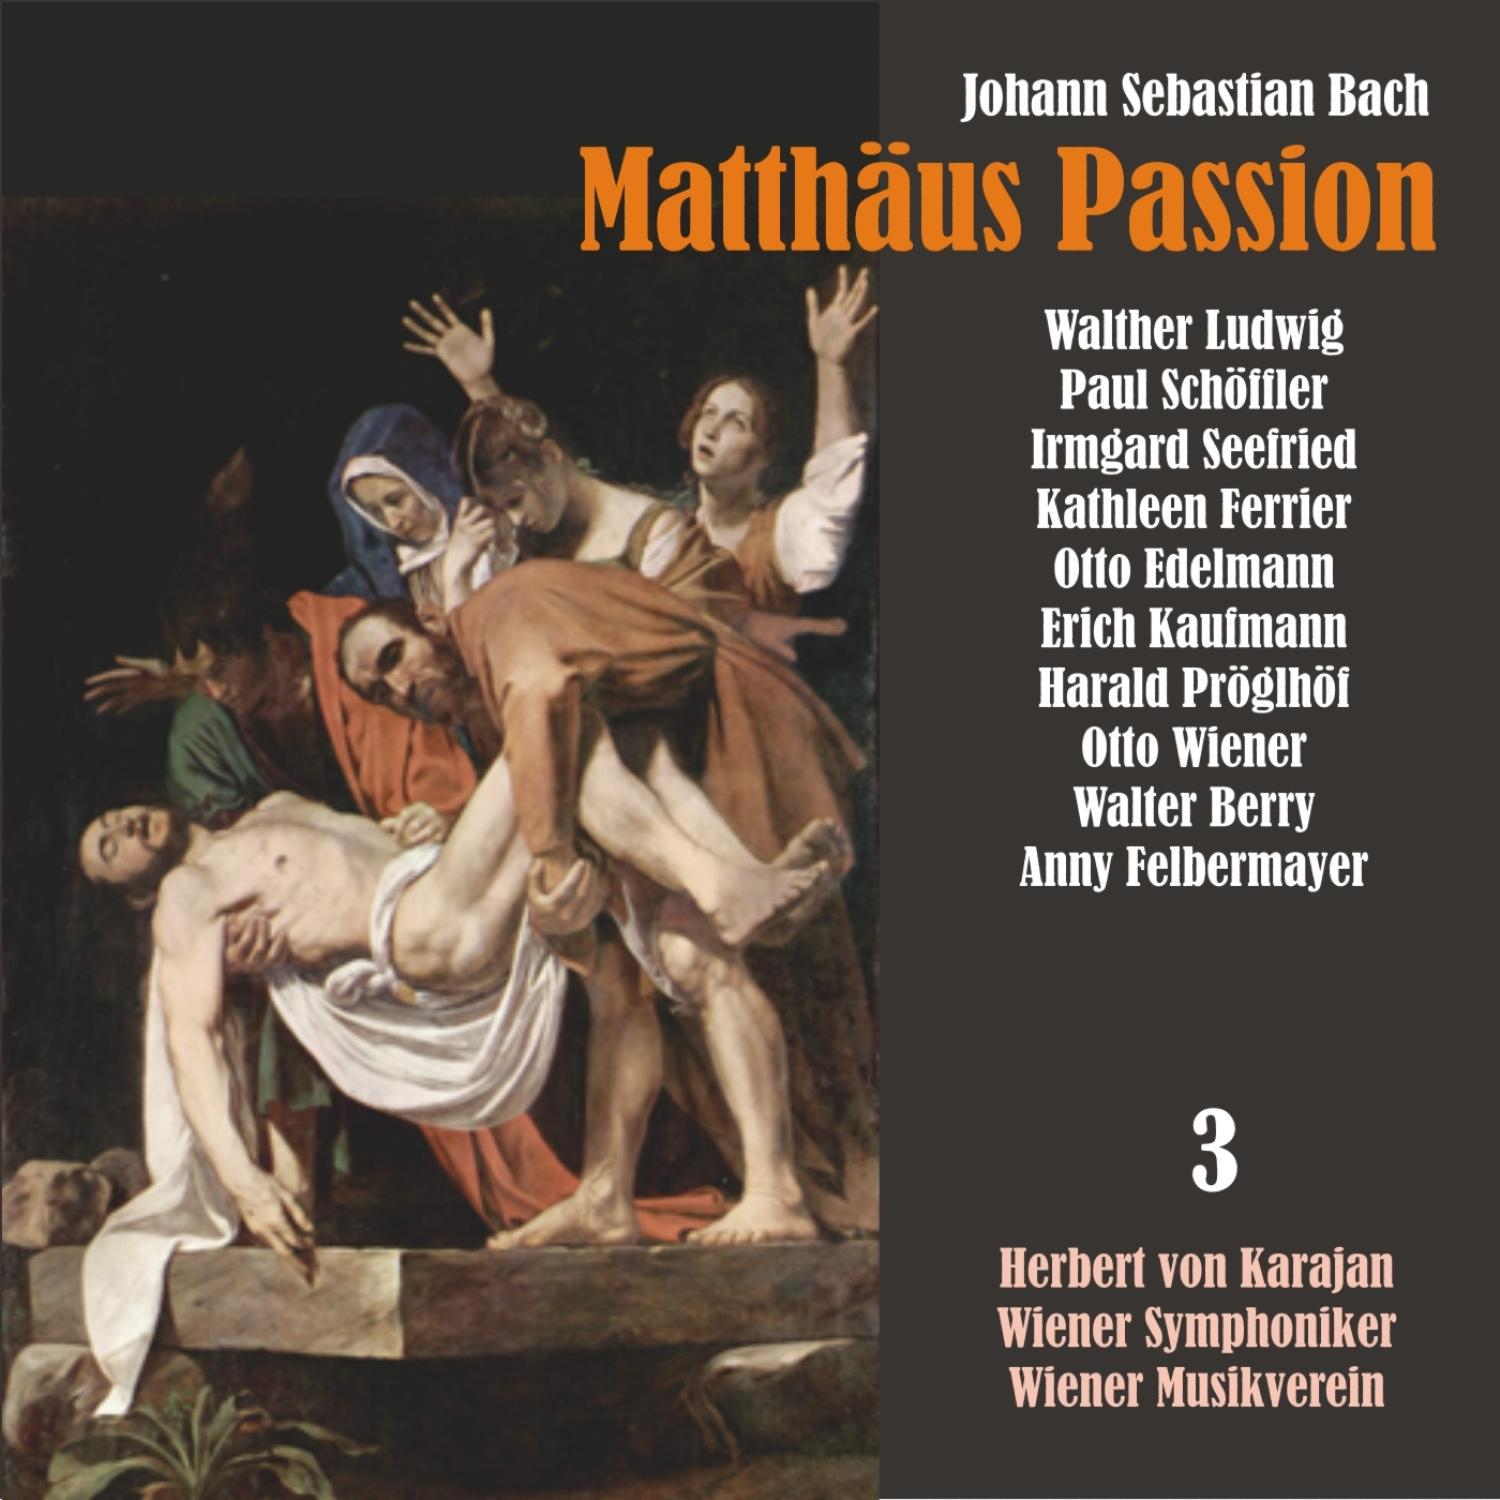 Matth us Passion, BWV 244: " Am Abend, da es kuhle war"